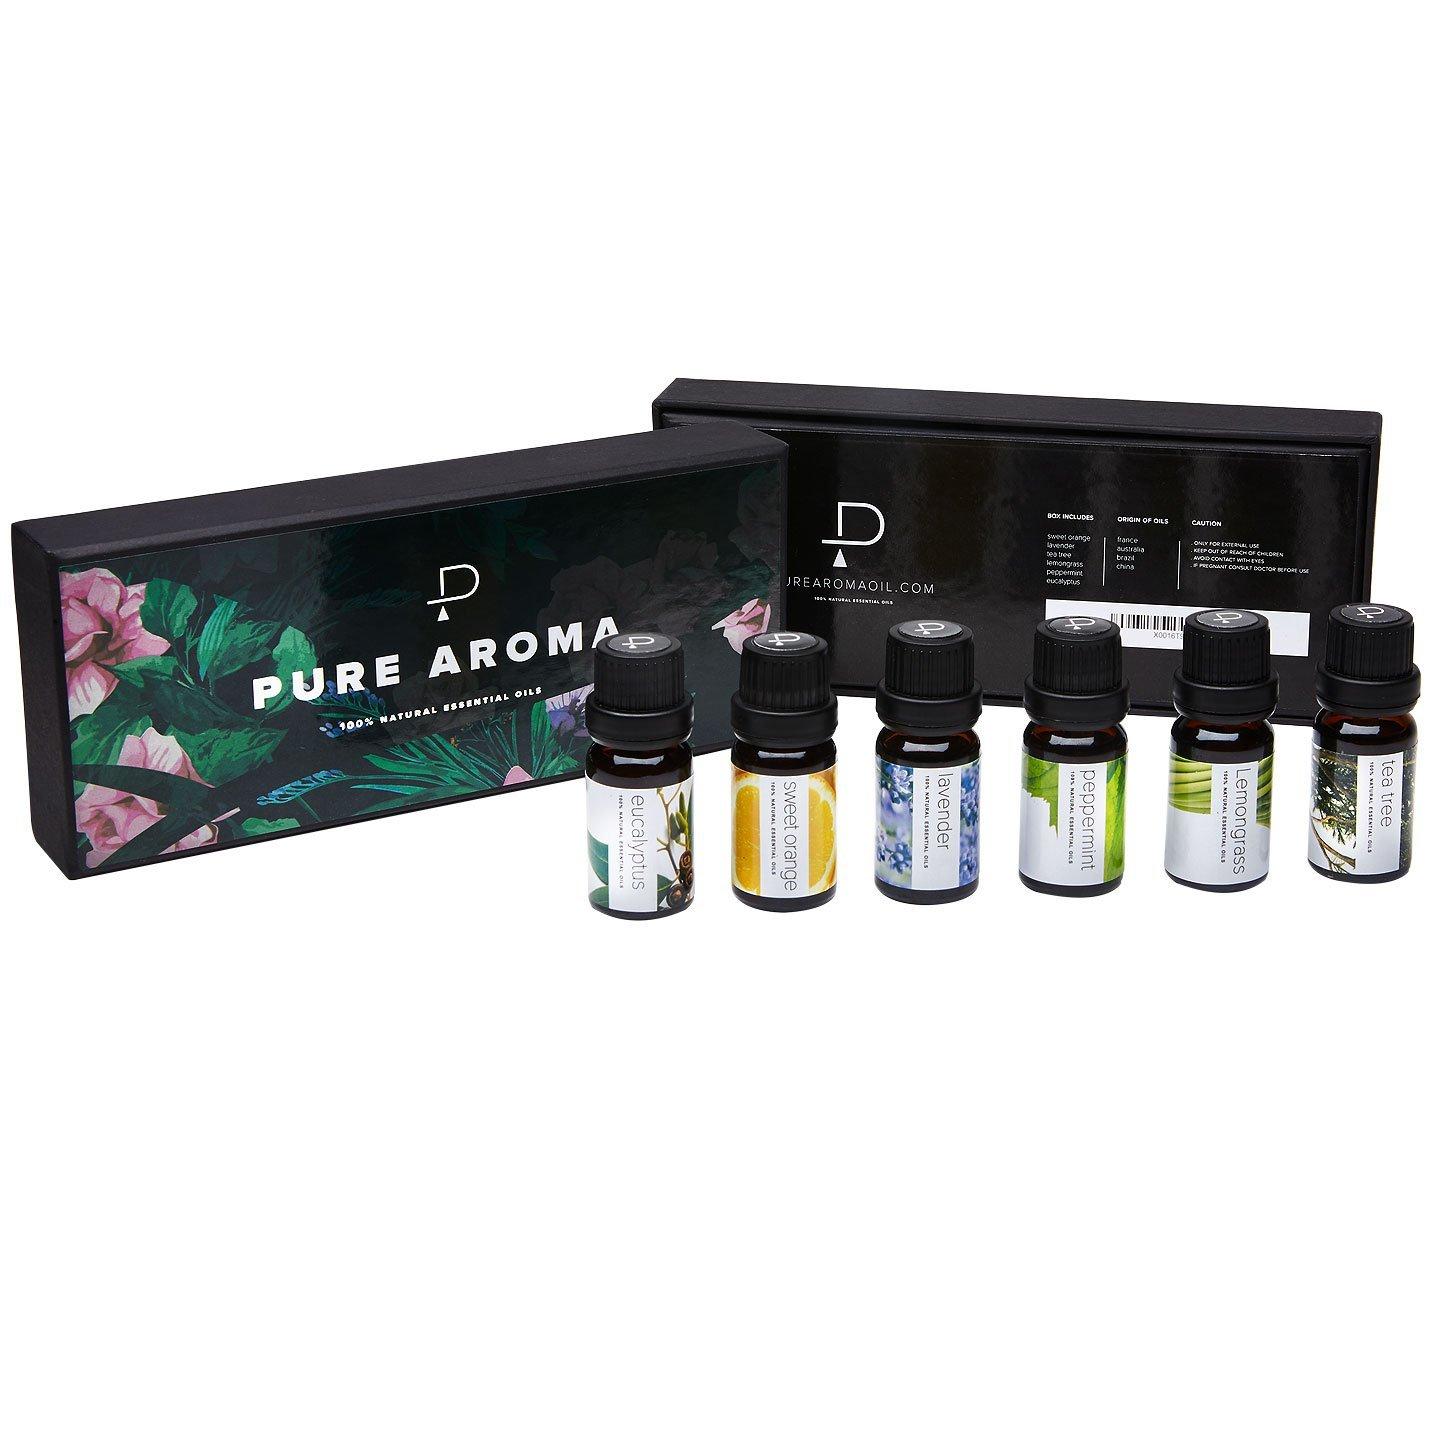 Onepure Aromatherapy Essential Oils Gift Set, 6 bottles/ 10ml Each, 100% Pure ( Lavender, Tea Tree, Eucalyptus, Lemongrass, Sweet Orange